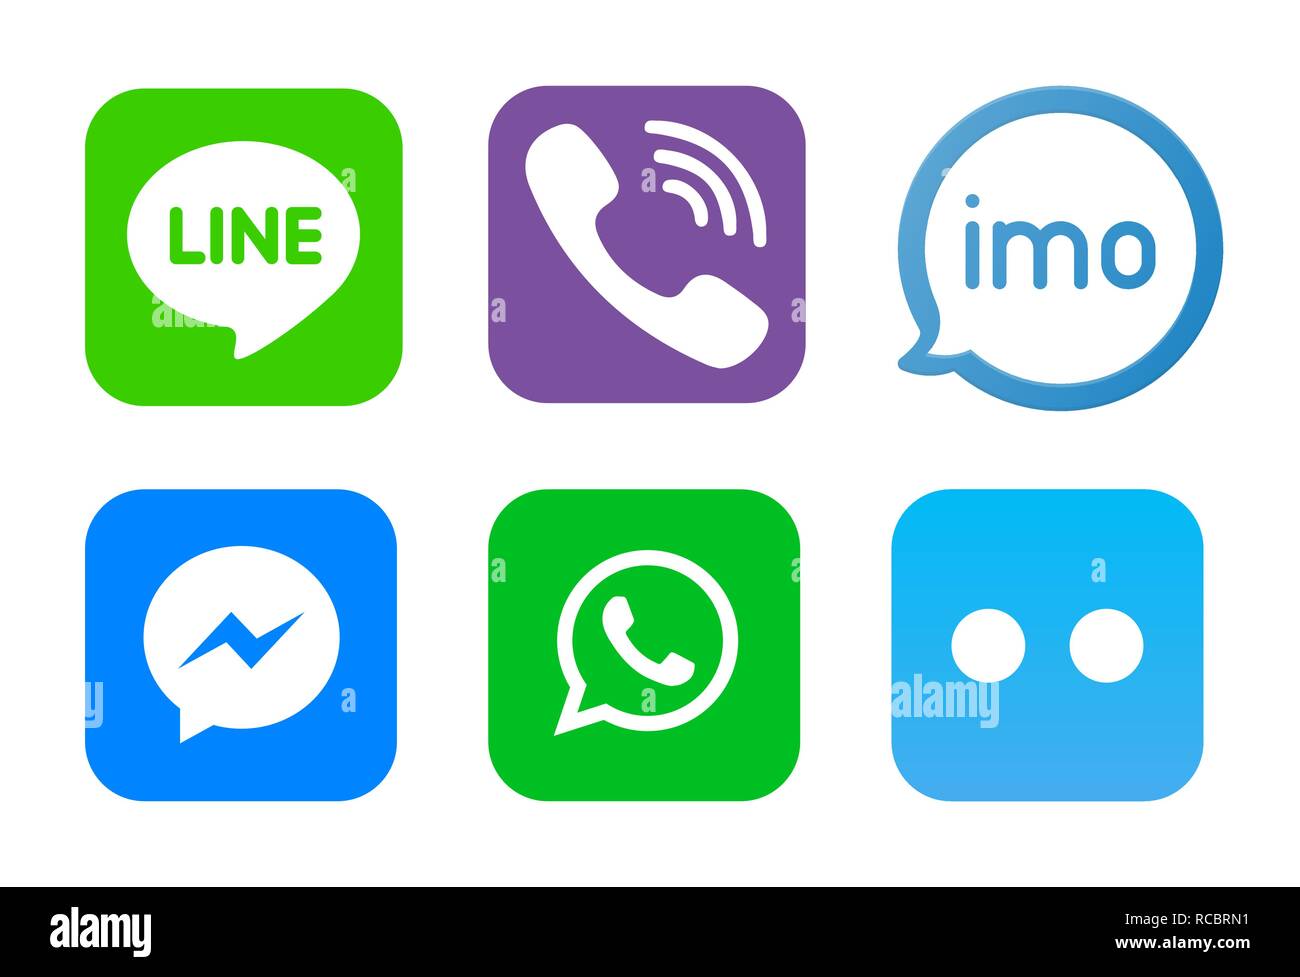 Wie und Chat Sprechblase unterzeichnen. Viber Line Logo, Logo, imo logo Vektor, messenger Logo, Logo, WhatsApp botim logo Vektor. Stock Vektor